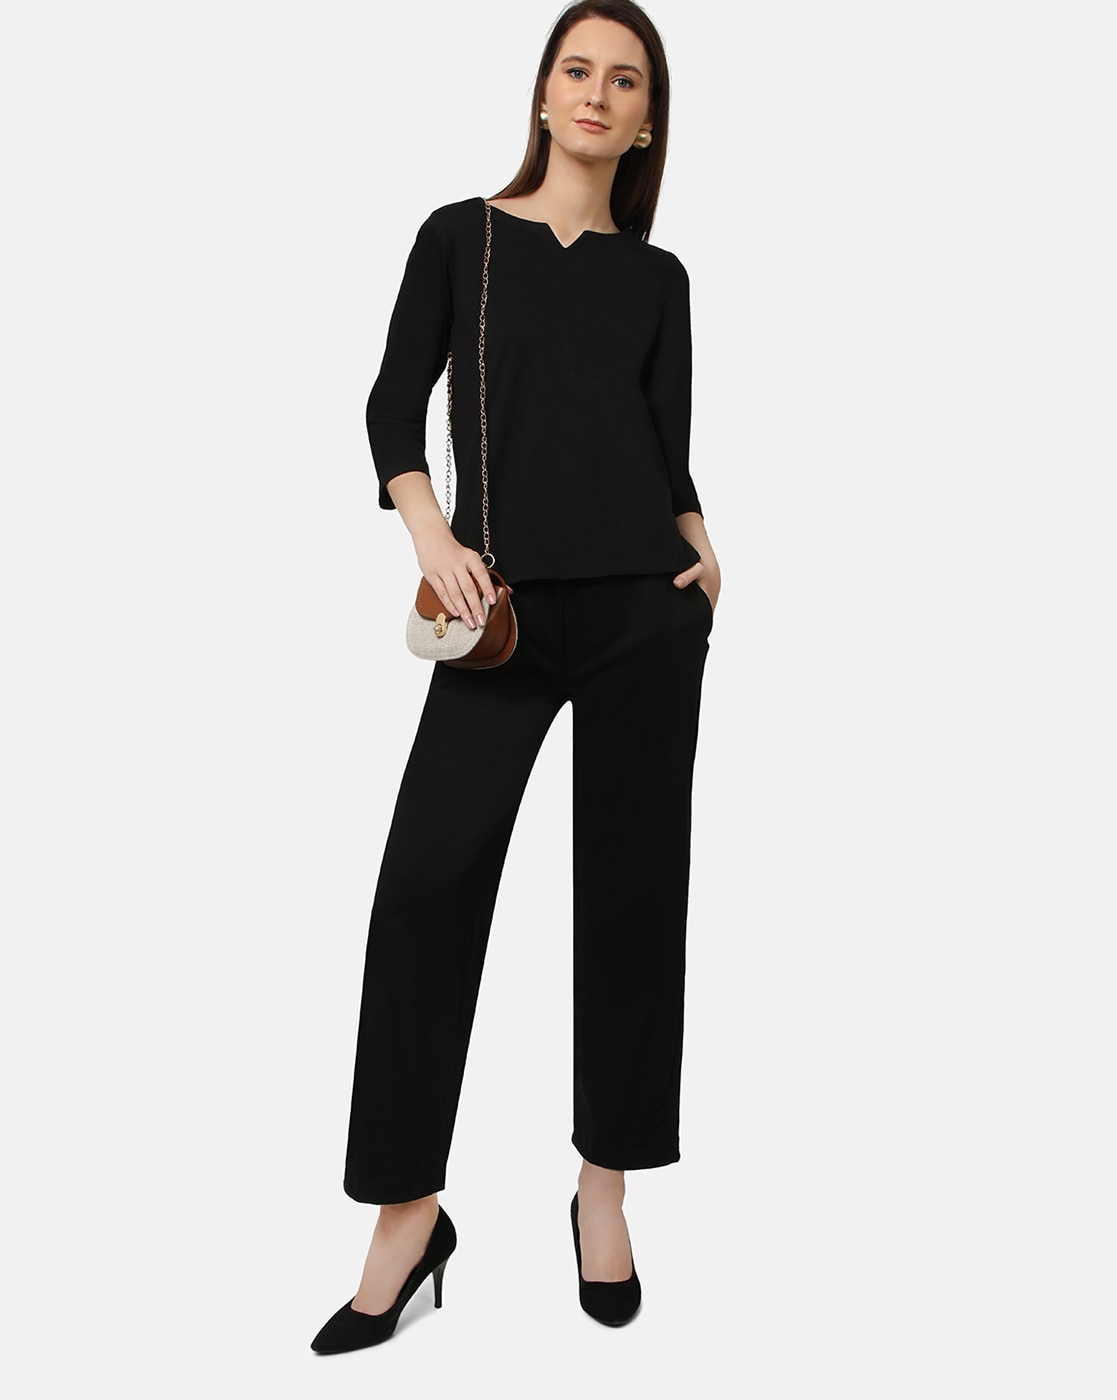 Buy Black Suit Sets for Women by ASHTAG Online